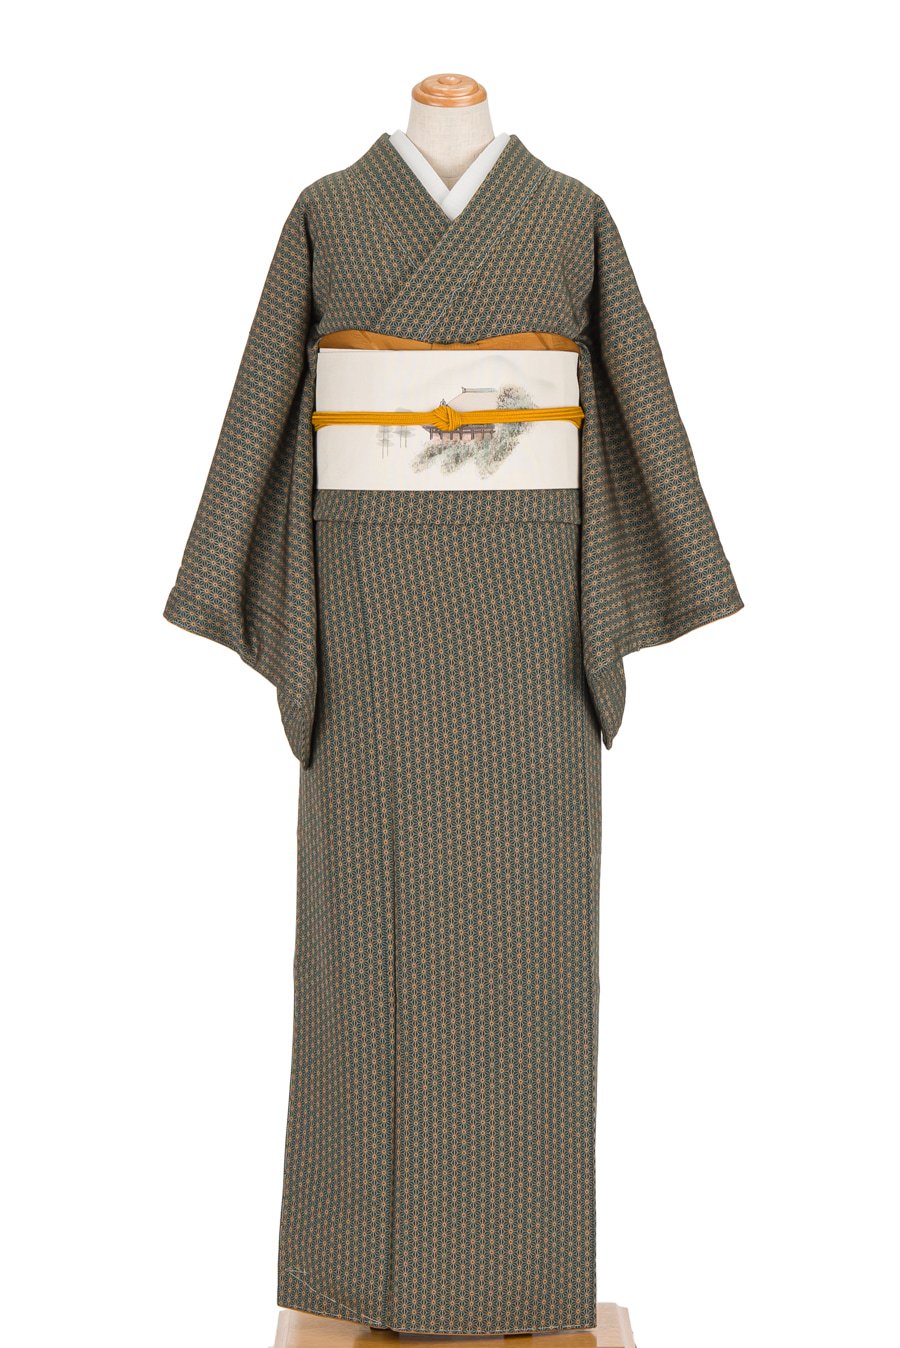 K-1827 紬着物 麻の葉柄 グラデーション 絣模様 - 女性和服、着物